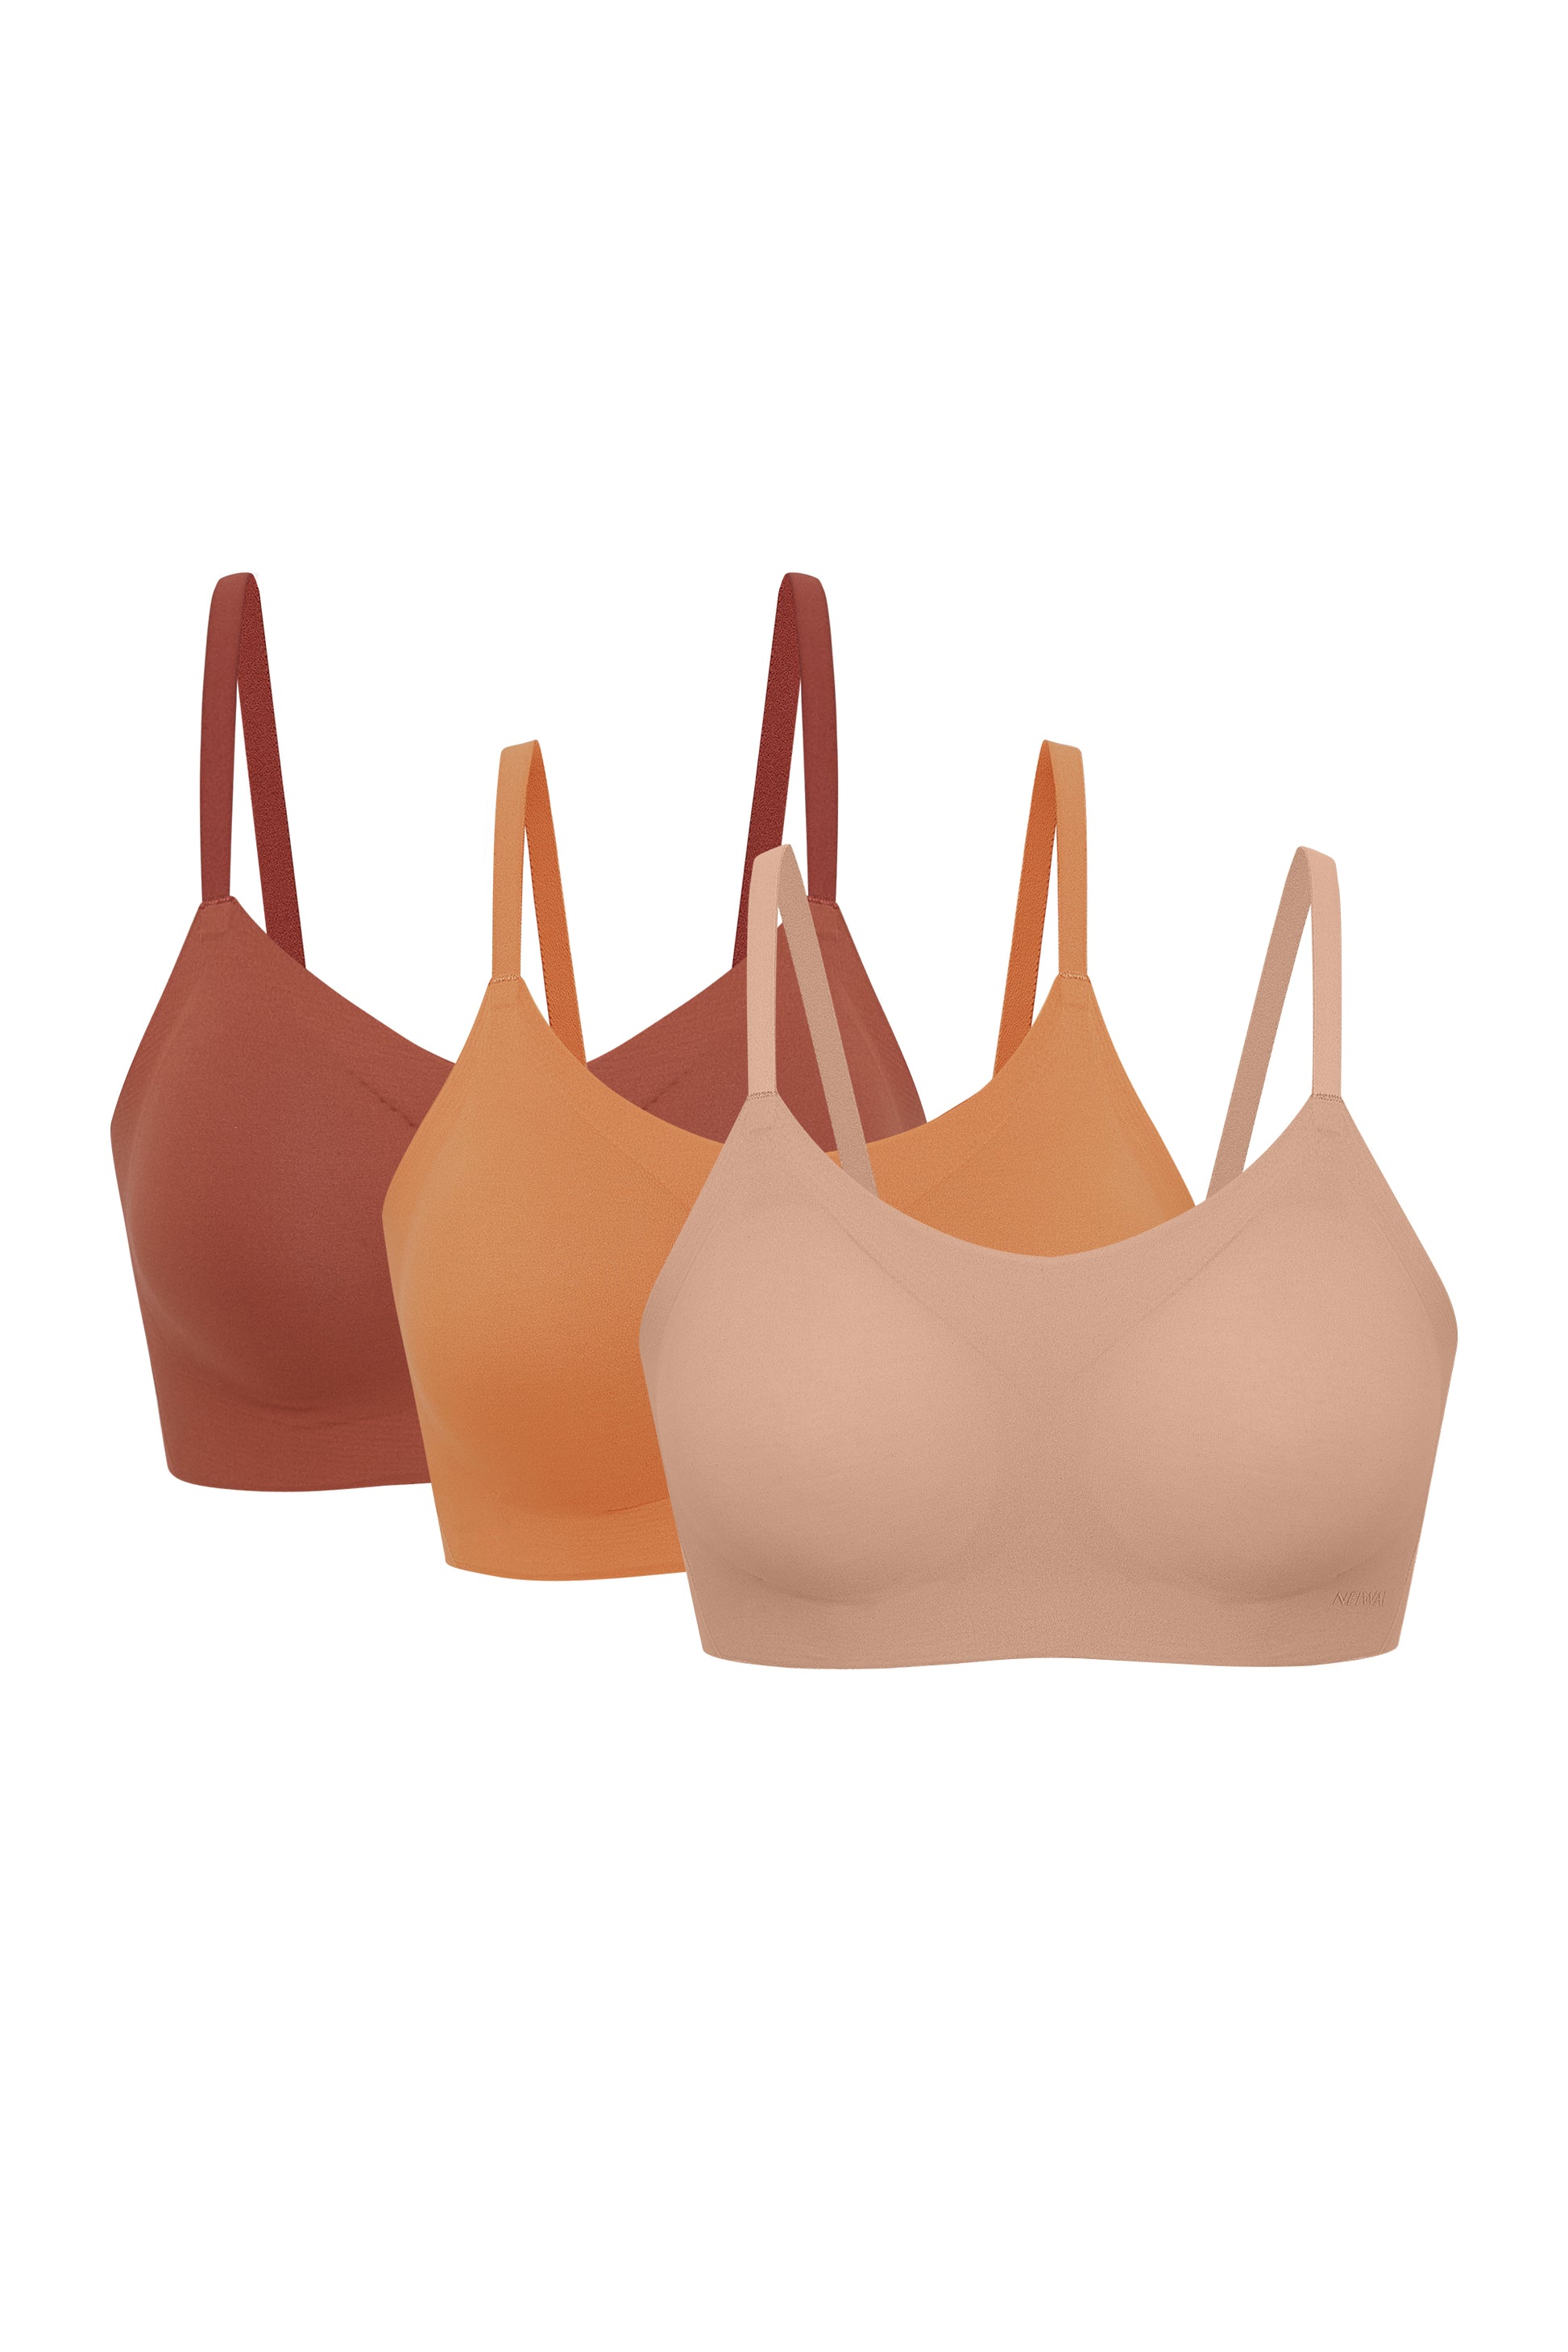 Flat lay image of tan, light orange, and dark orange spaghetti strap bras